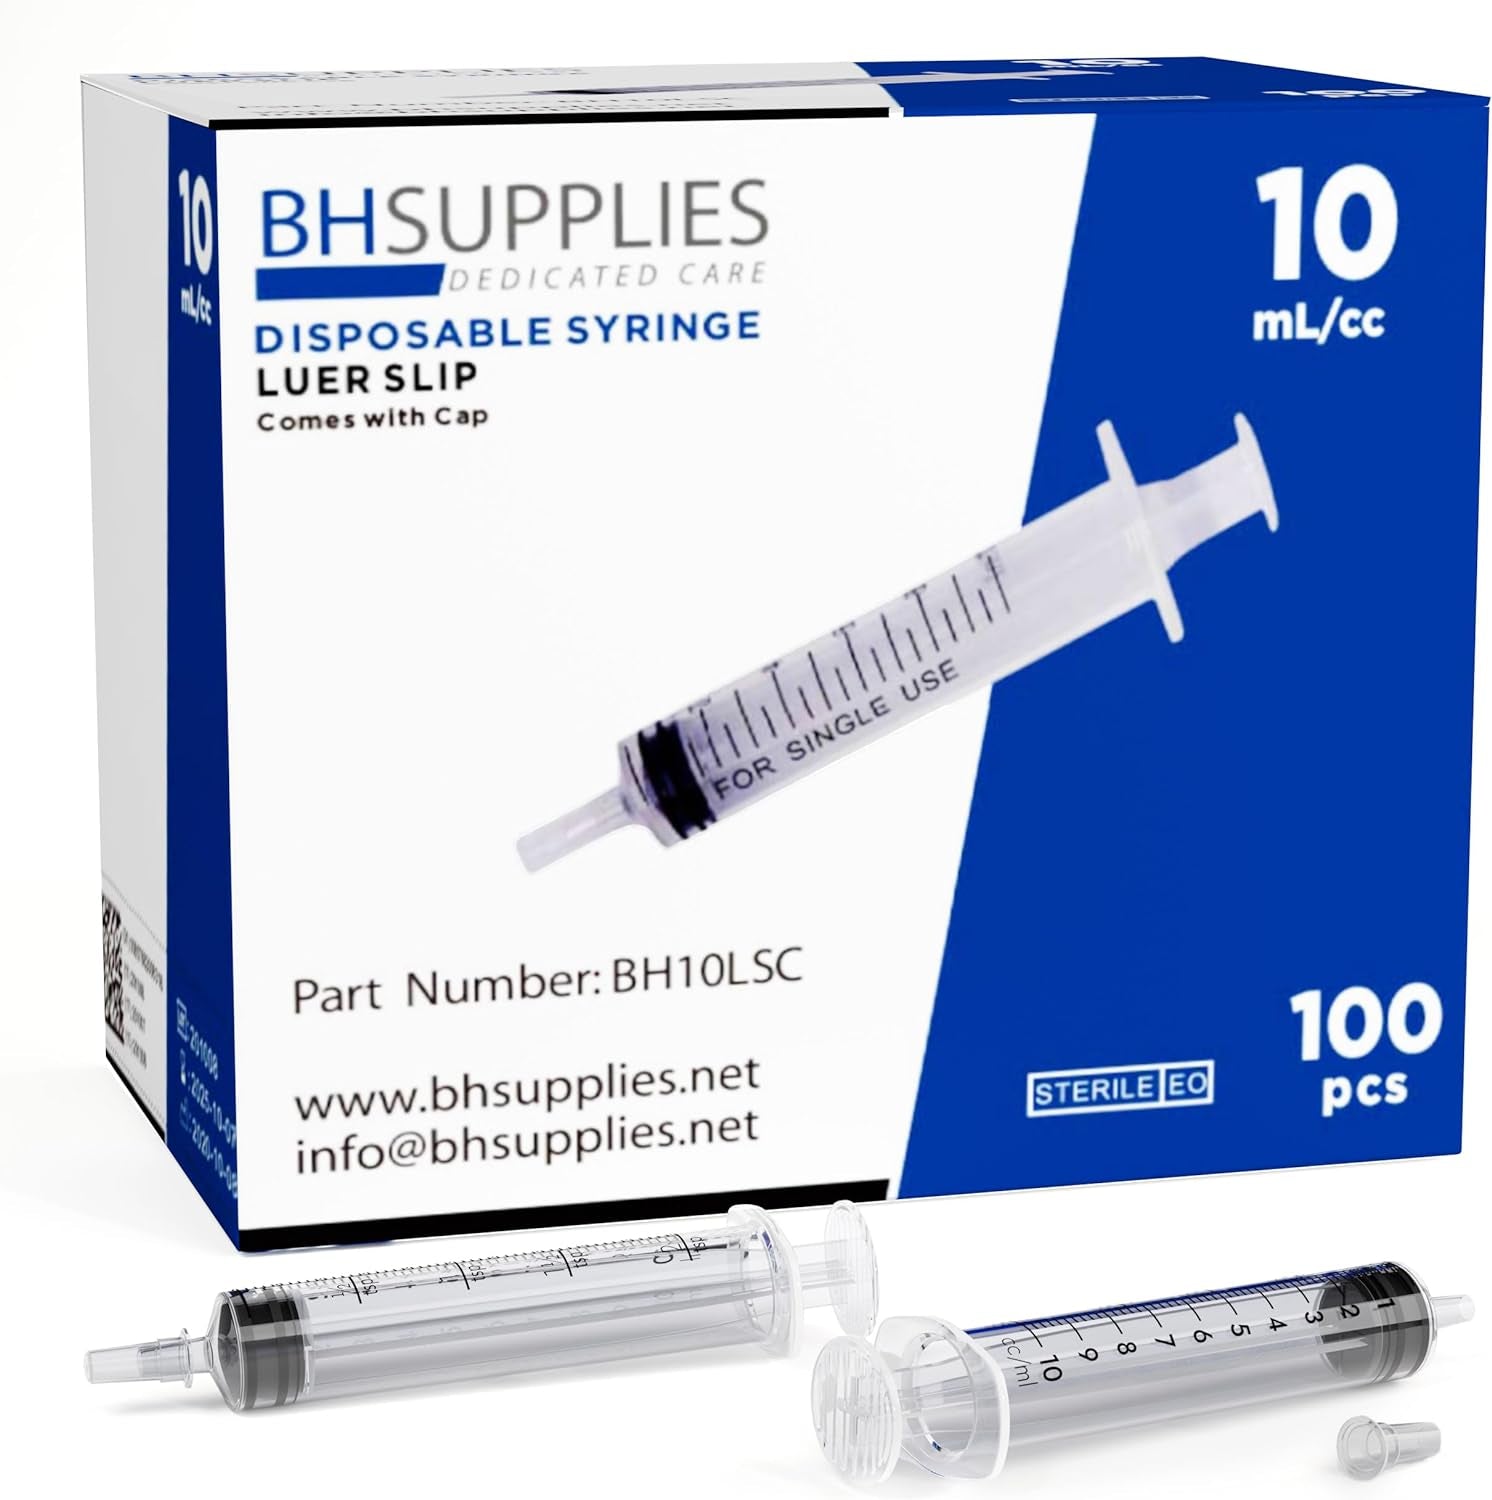 10Ml Luer Slip Tip Syringe - with Caps (No Needle) - Sterile, Individually Wrapped - 100 Syringes